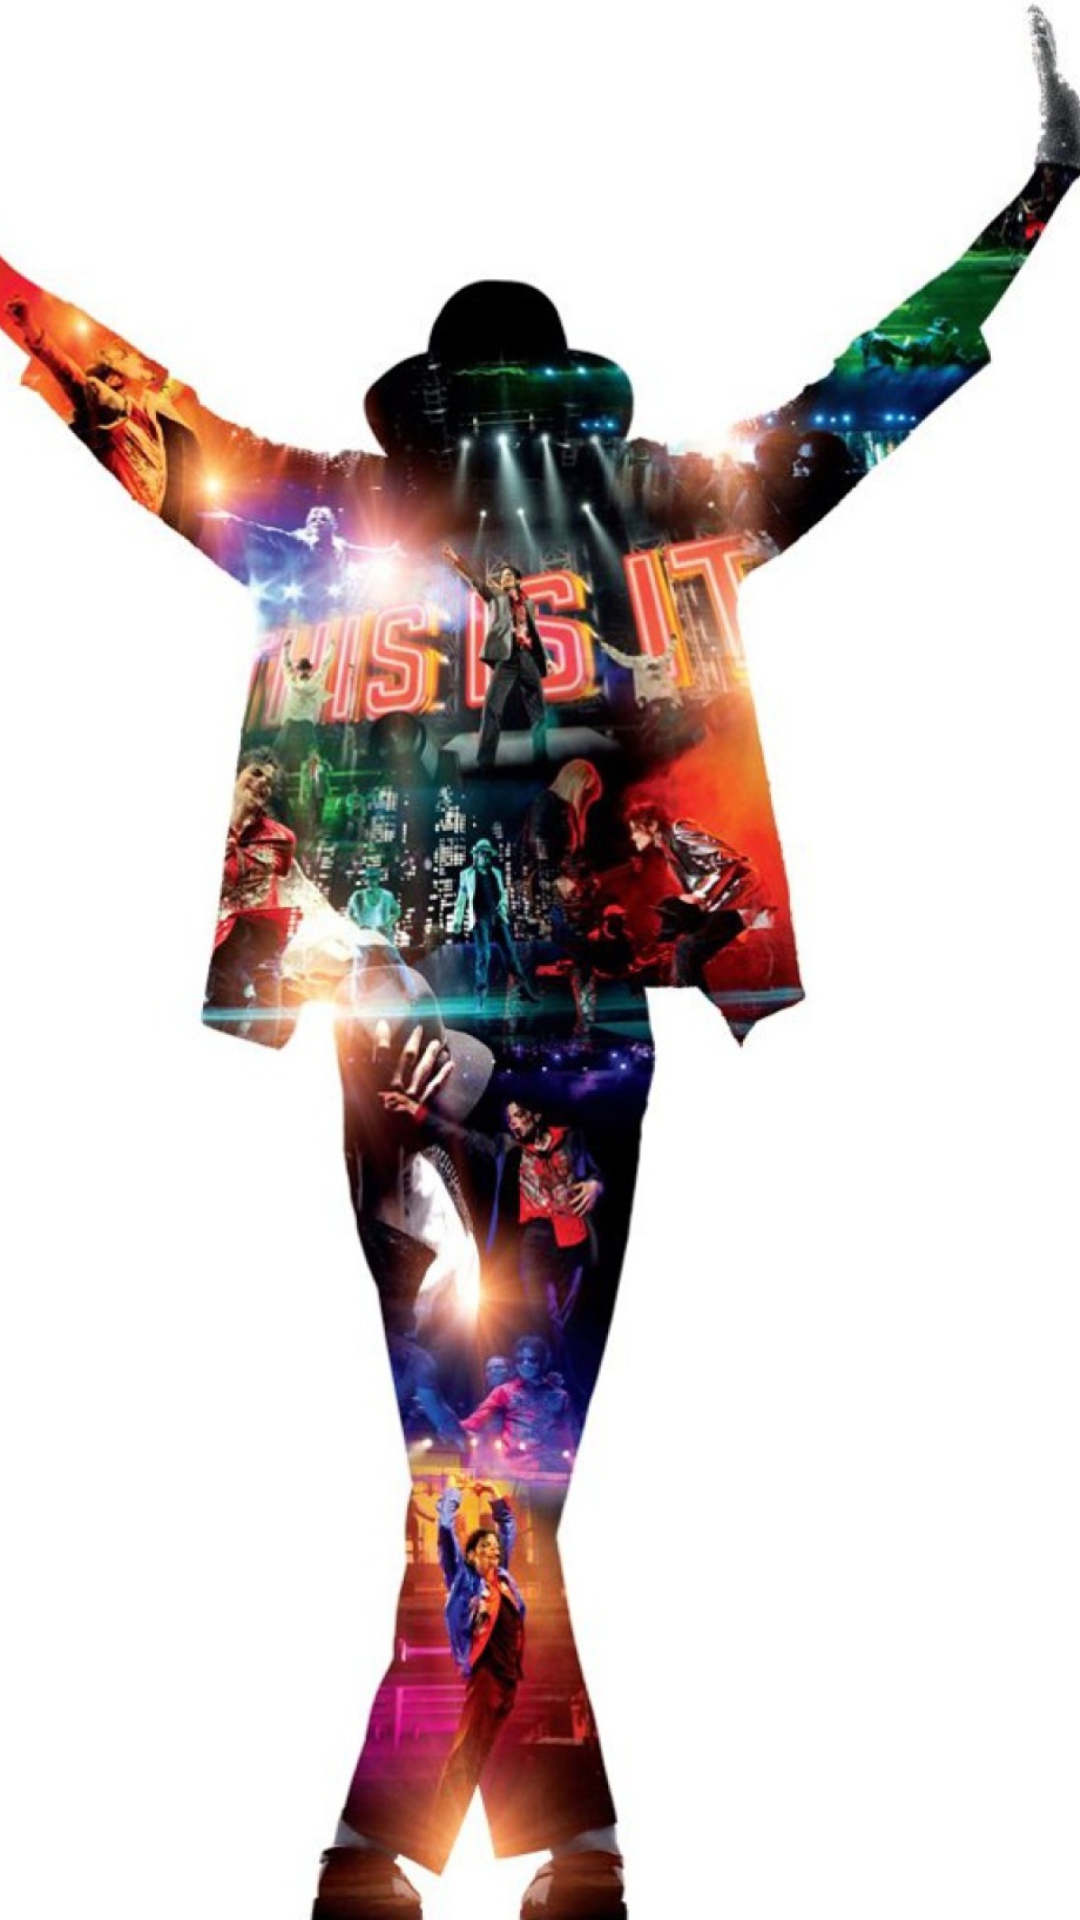 Michael Jackson Wallpaper for iPhone 6 Plus